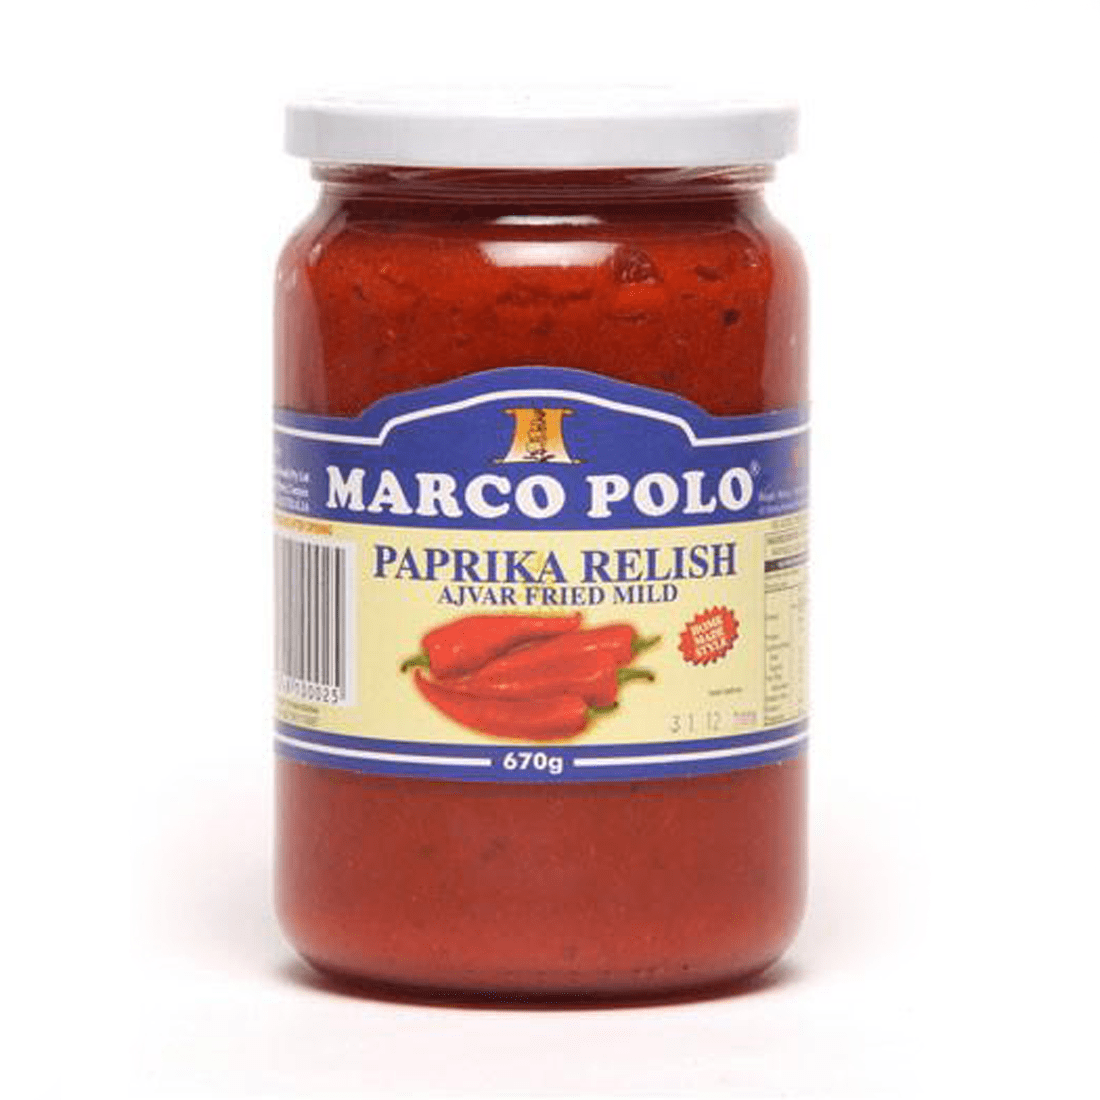 products-marco_polo_paprika_relish_pepper_sauce_ajvar_fried_mild_artisan_s_bottega.png